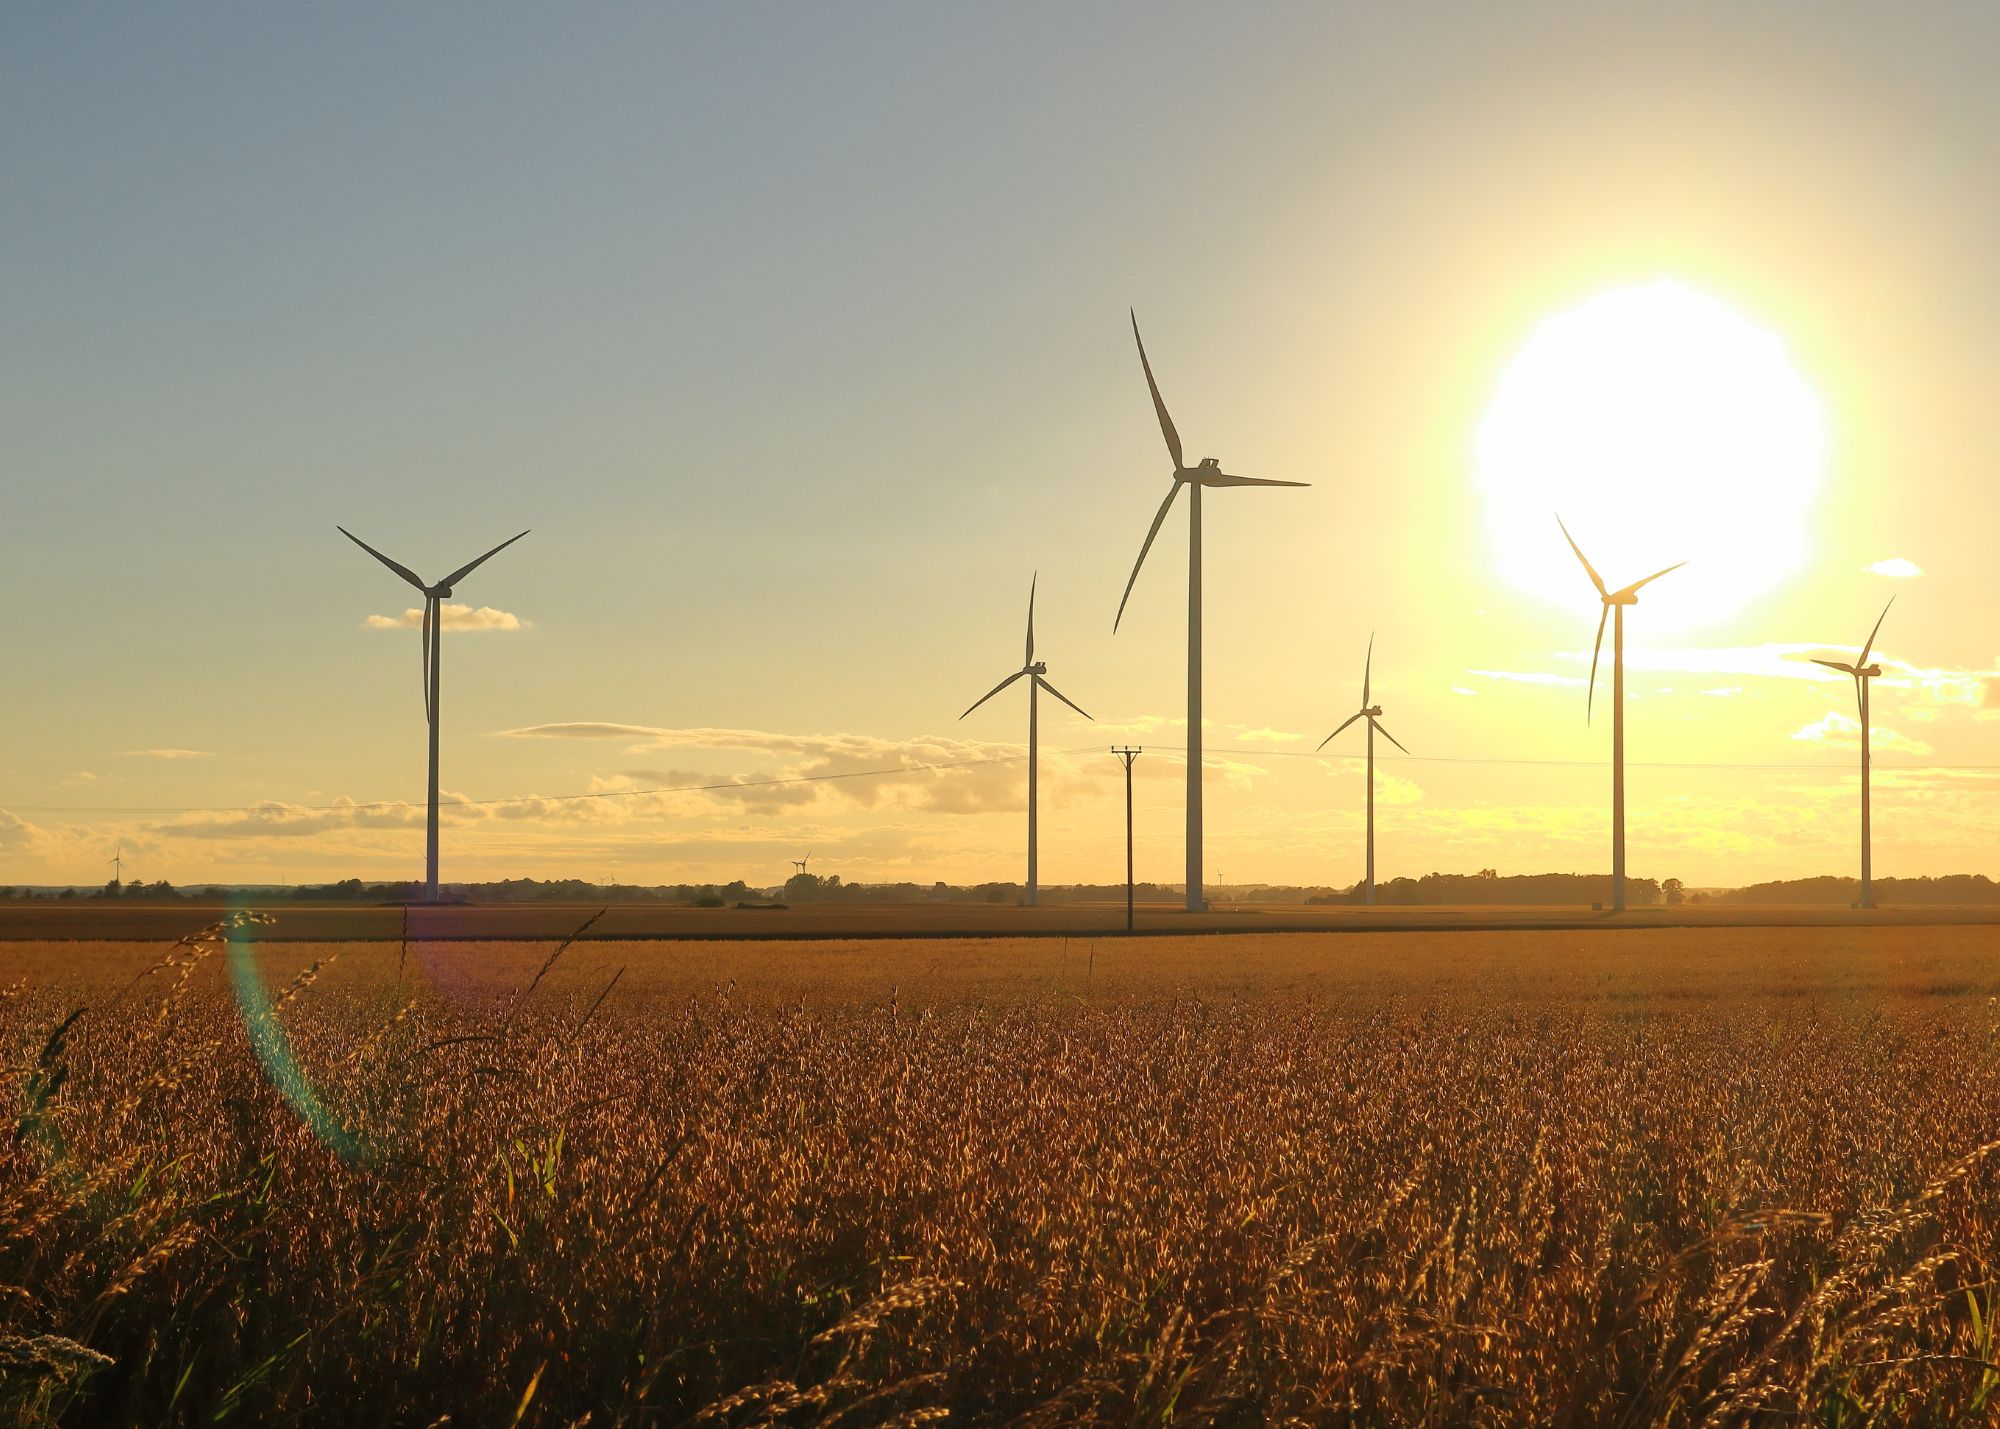 Swedish countryside with wind power turbines.